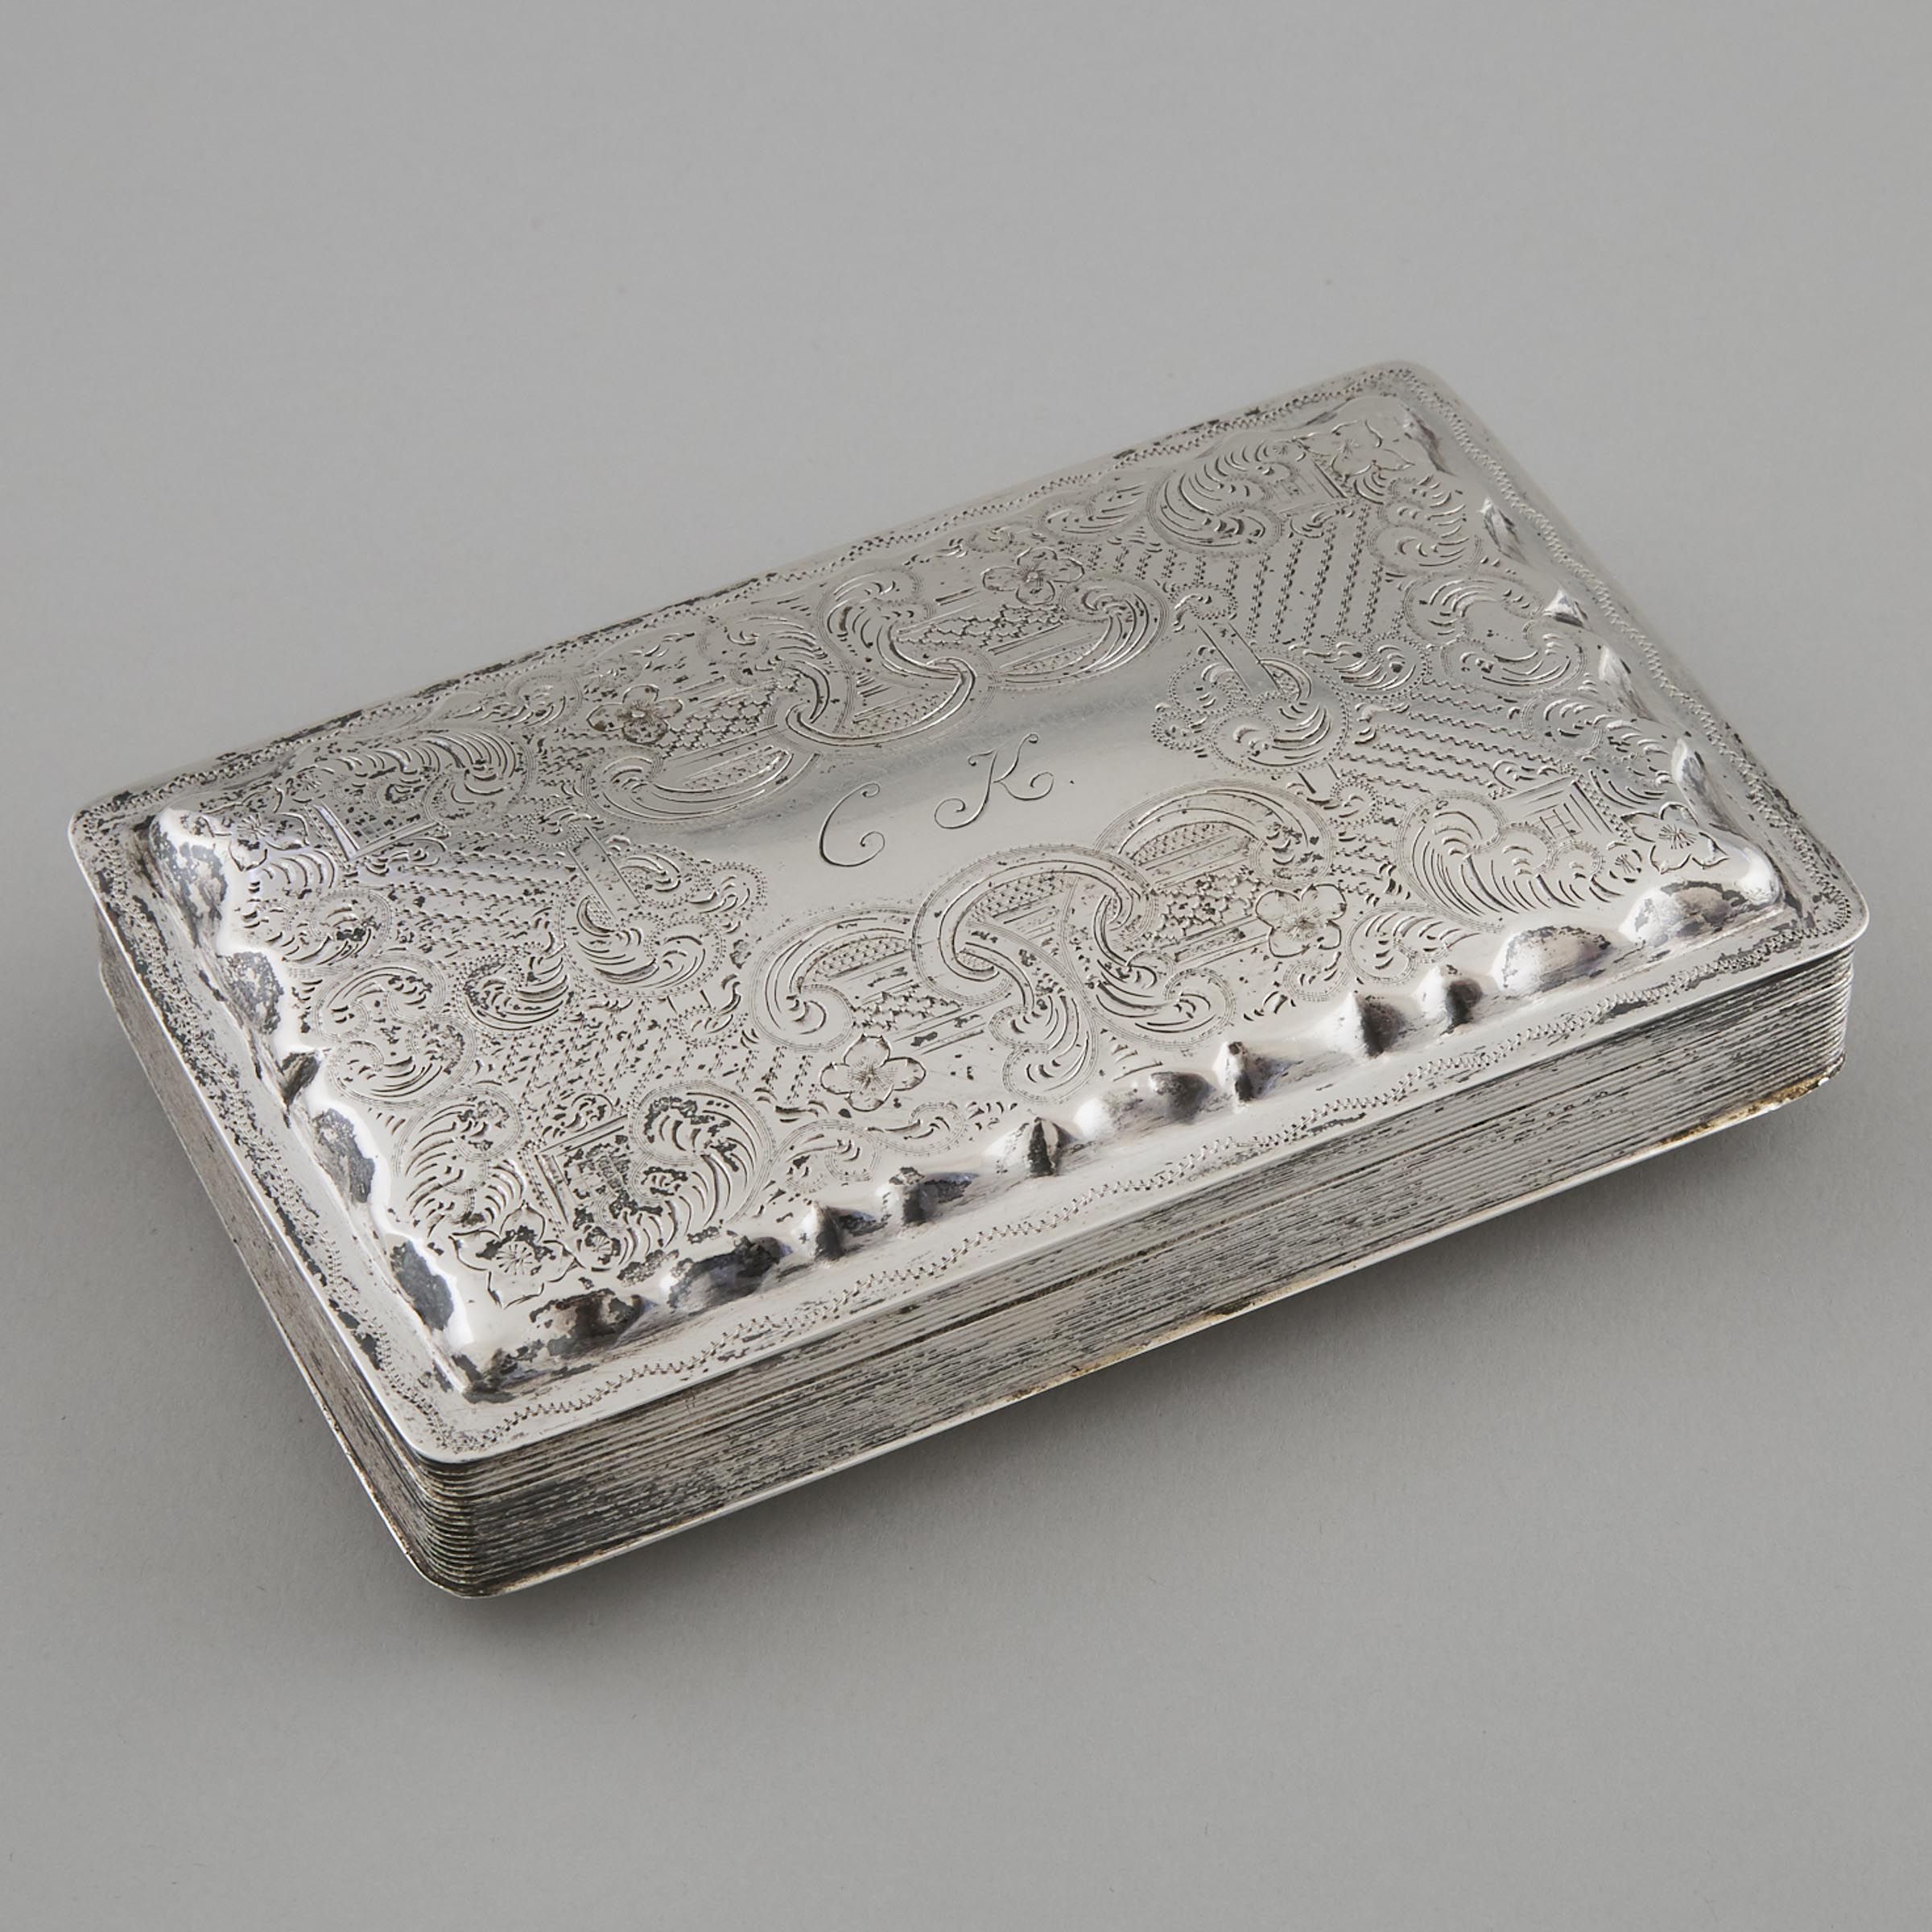 Dutch Silver Cigar Case, probably Cornelis Monteban, Schoonhoven, late 19th century